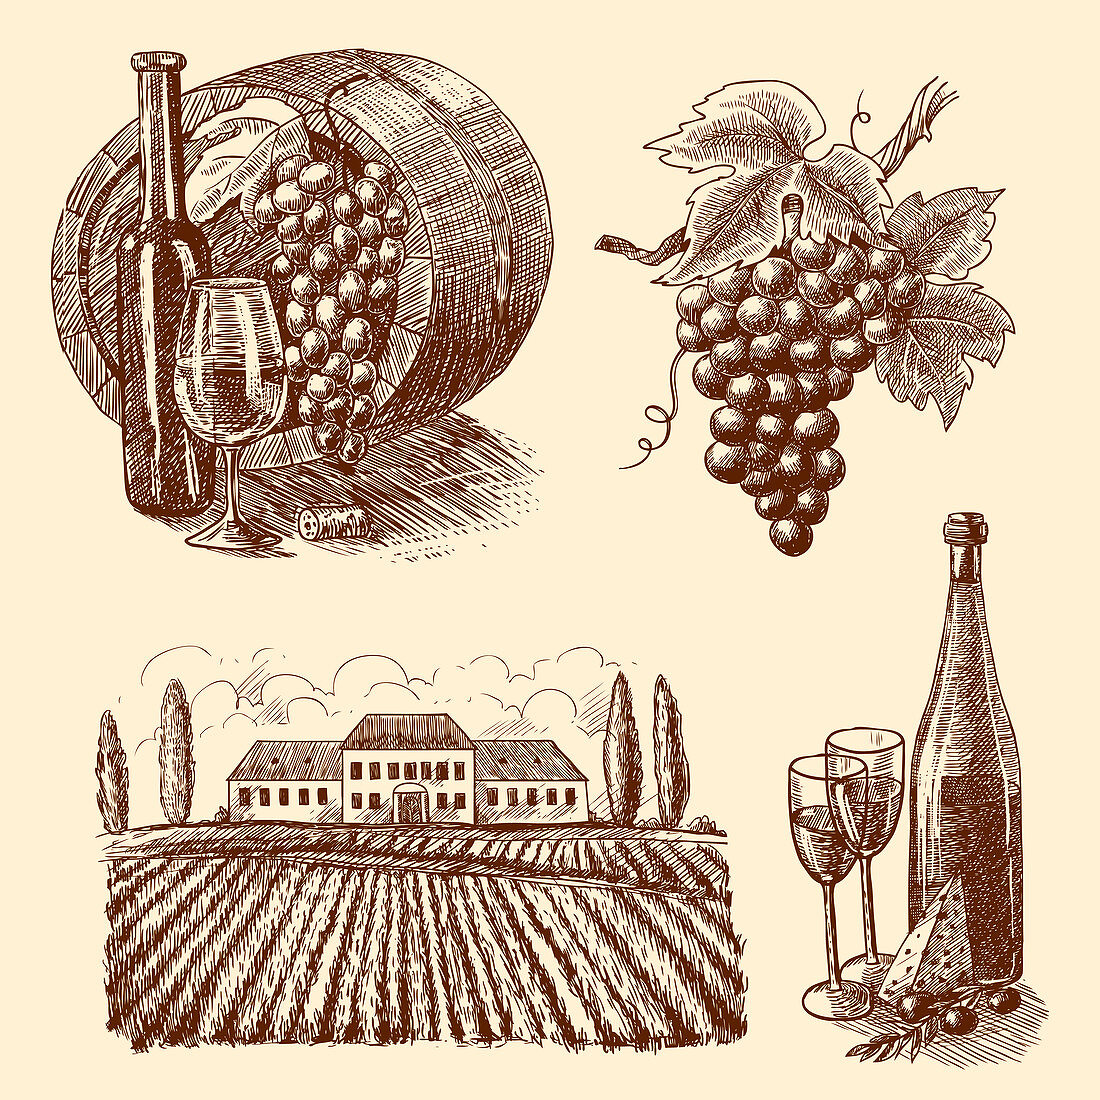 Wine, illustration